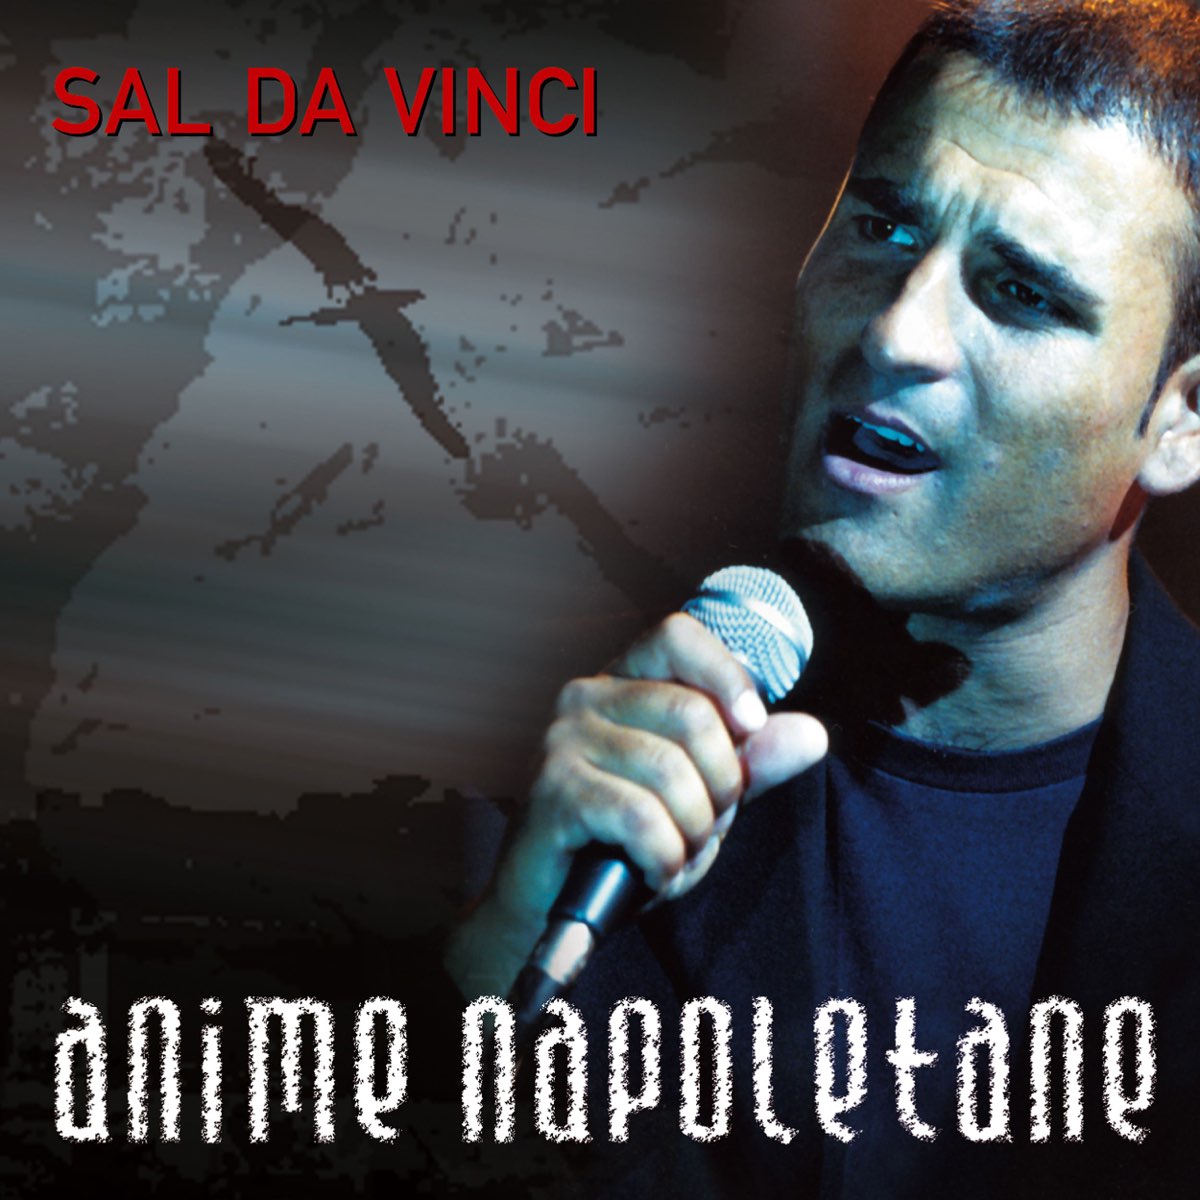 ‎Anime Napoletane by Sal da Vinci on Apple Music